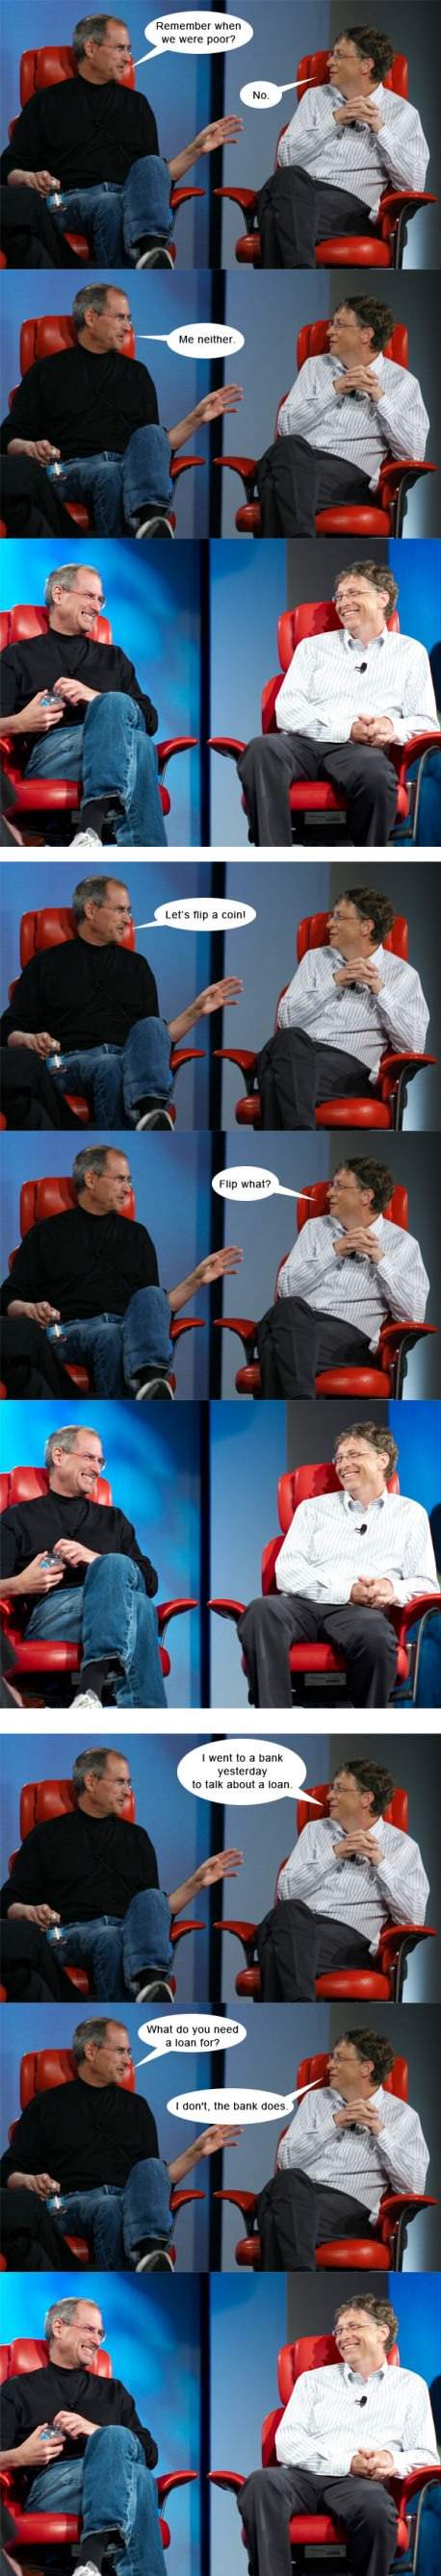 Geinen met Steve Jobs en Bill Gates